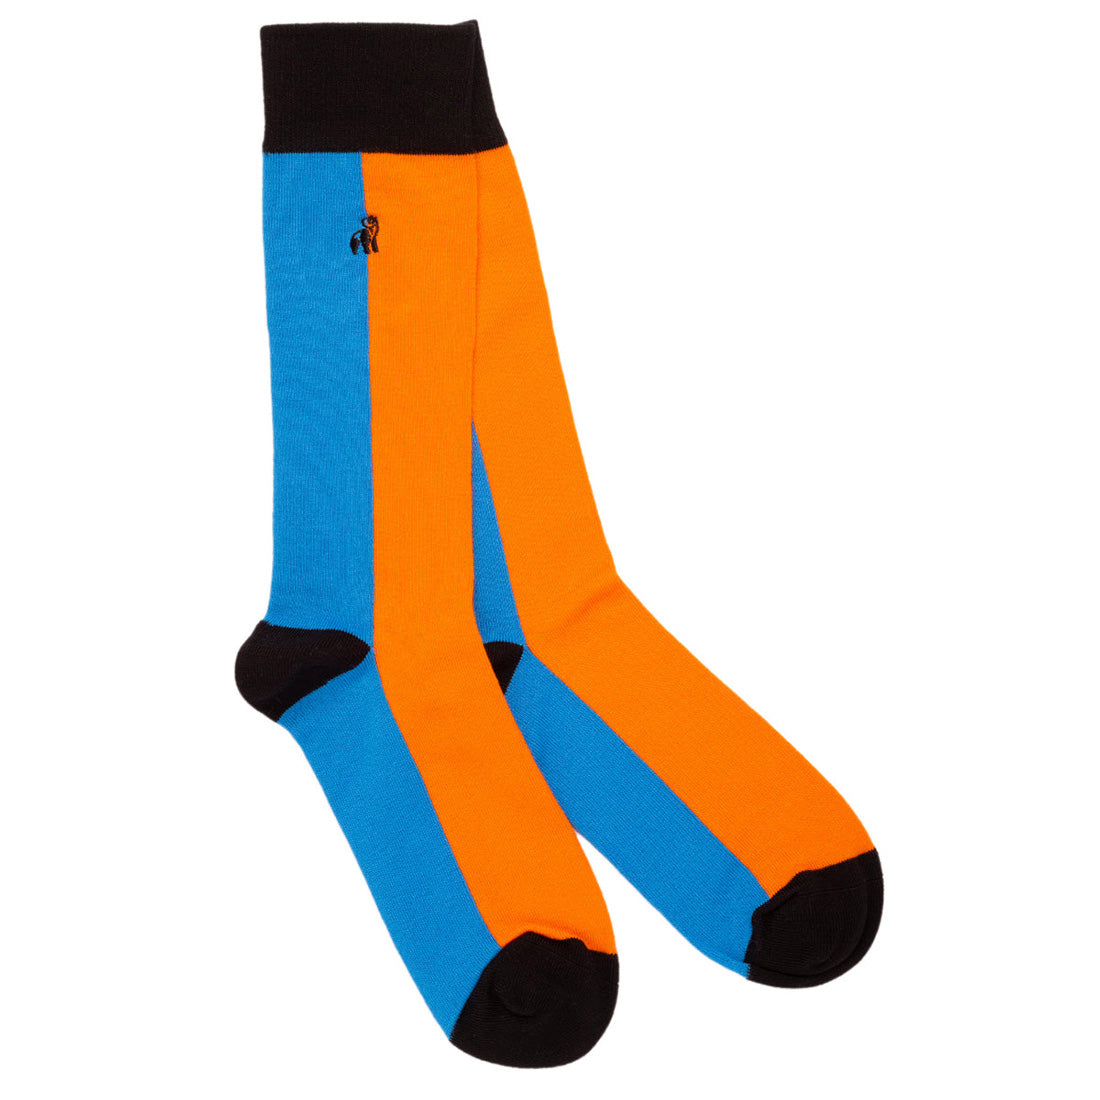 socks-orange-blue-vertical-striped-bamboo-socks-1_8f684ac6-bac7-424e-b75b-2b65a040d15b.jpg